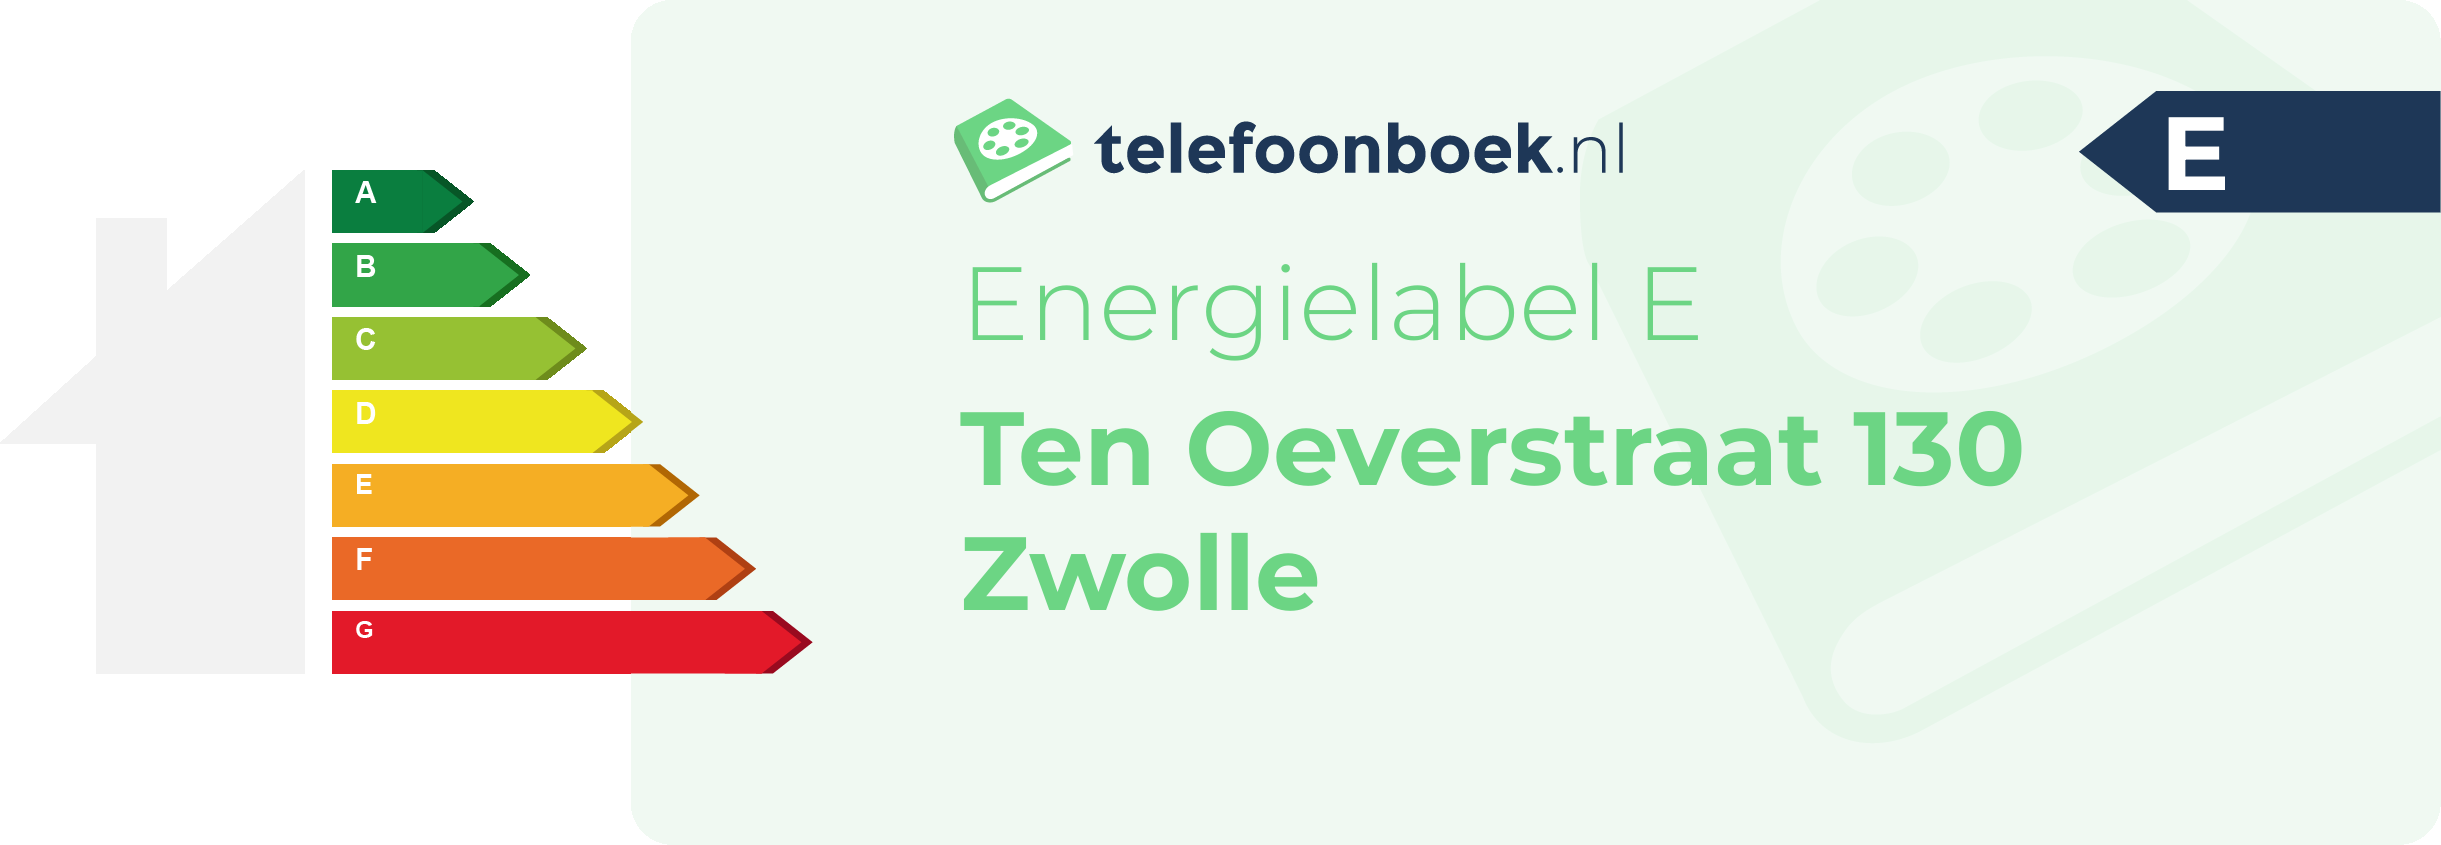 Energielabel Ten Oeverstraat 130 Zwolle